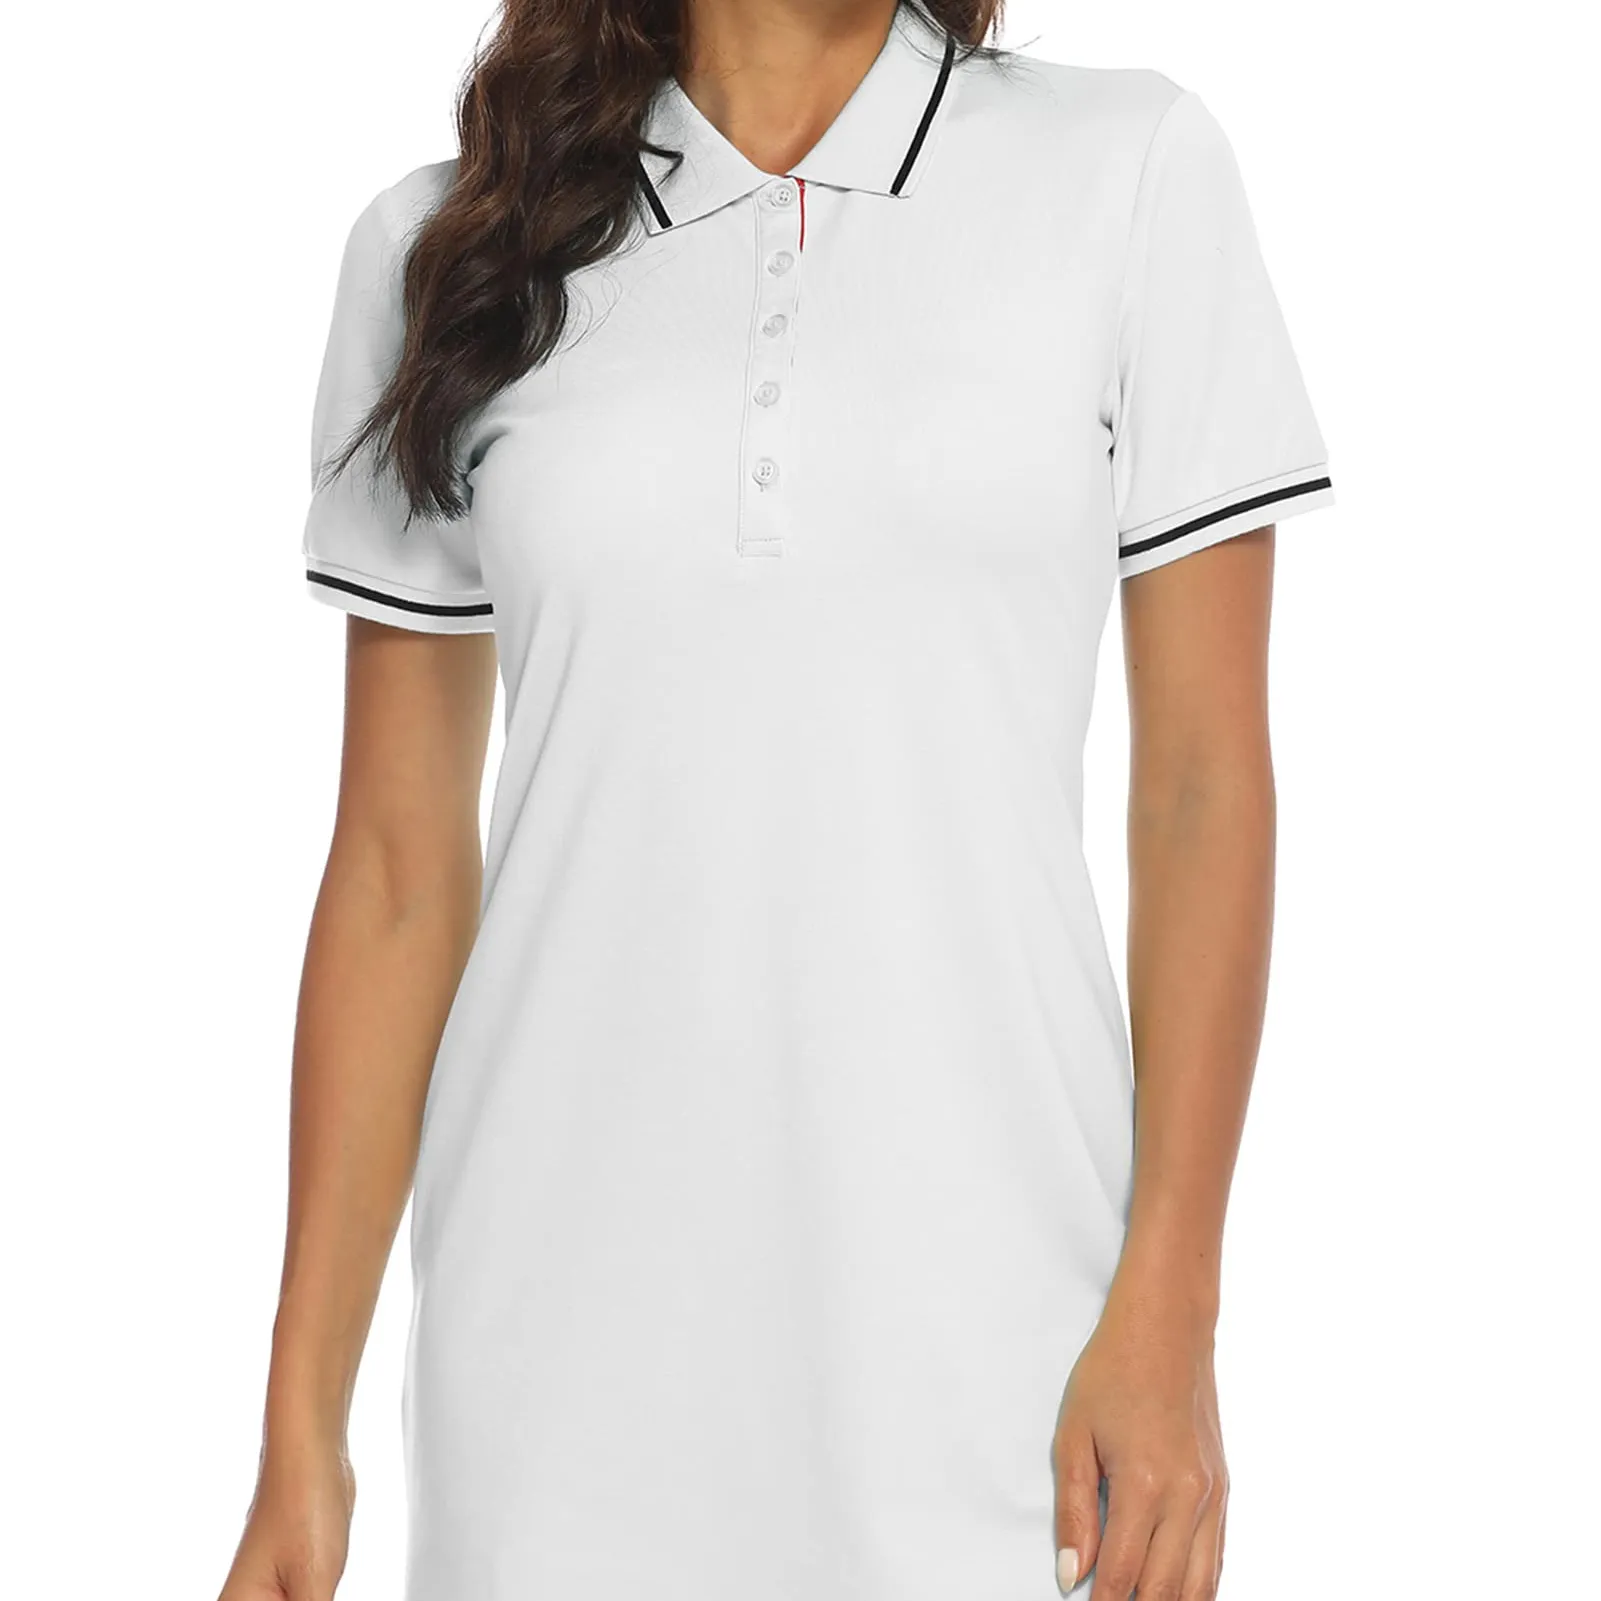 Vestido de Golf de manga corta con logotipo personalizado para mujer, Camiseta deportiva para exteriores, anti-uv